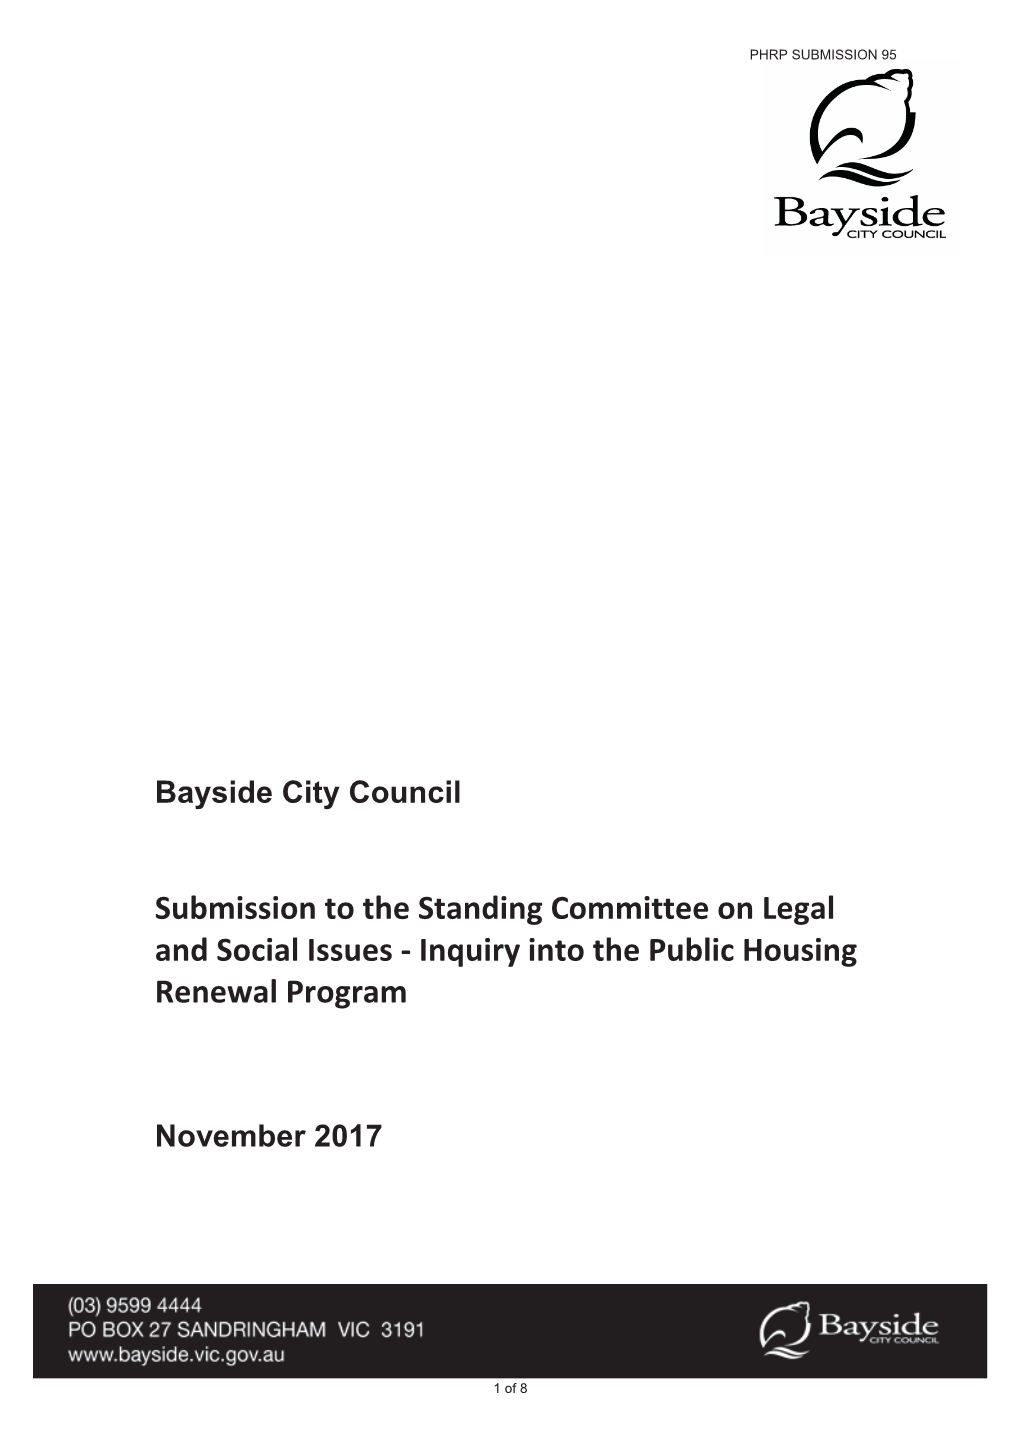 Inquiry Into the Public Housing Renewal Program